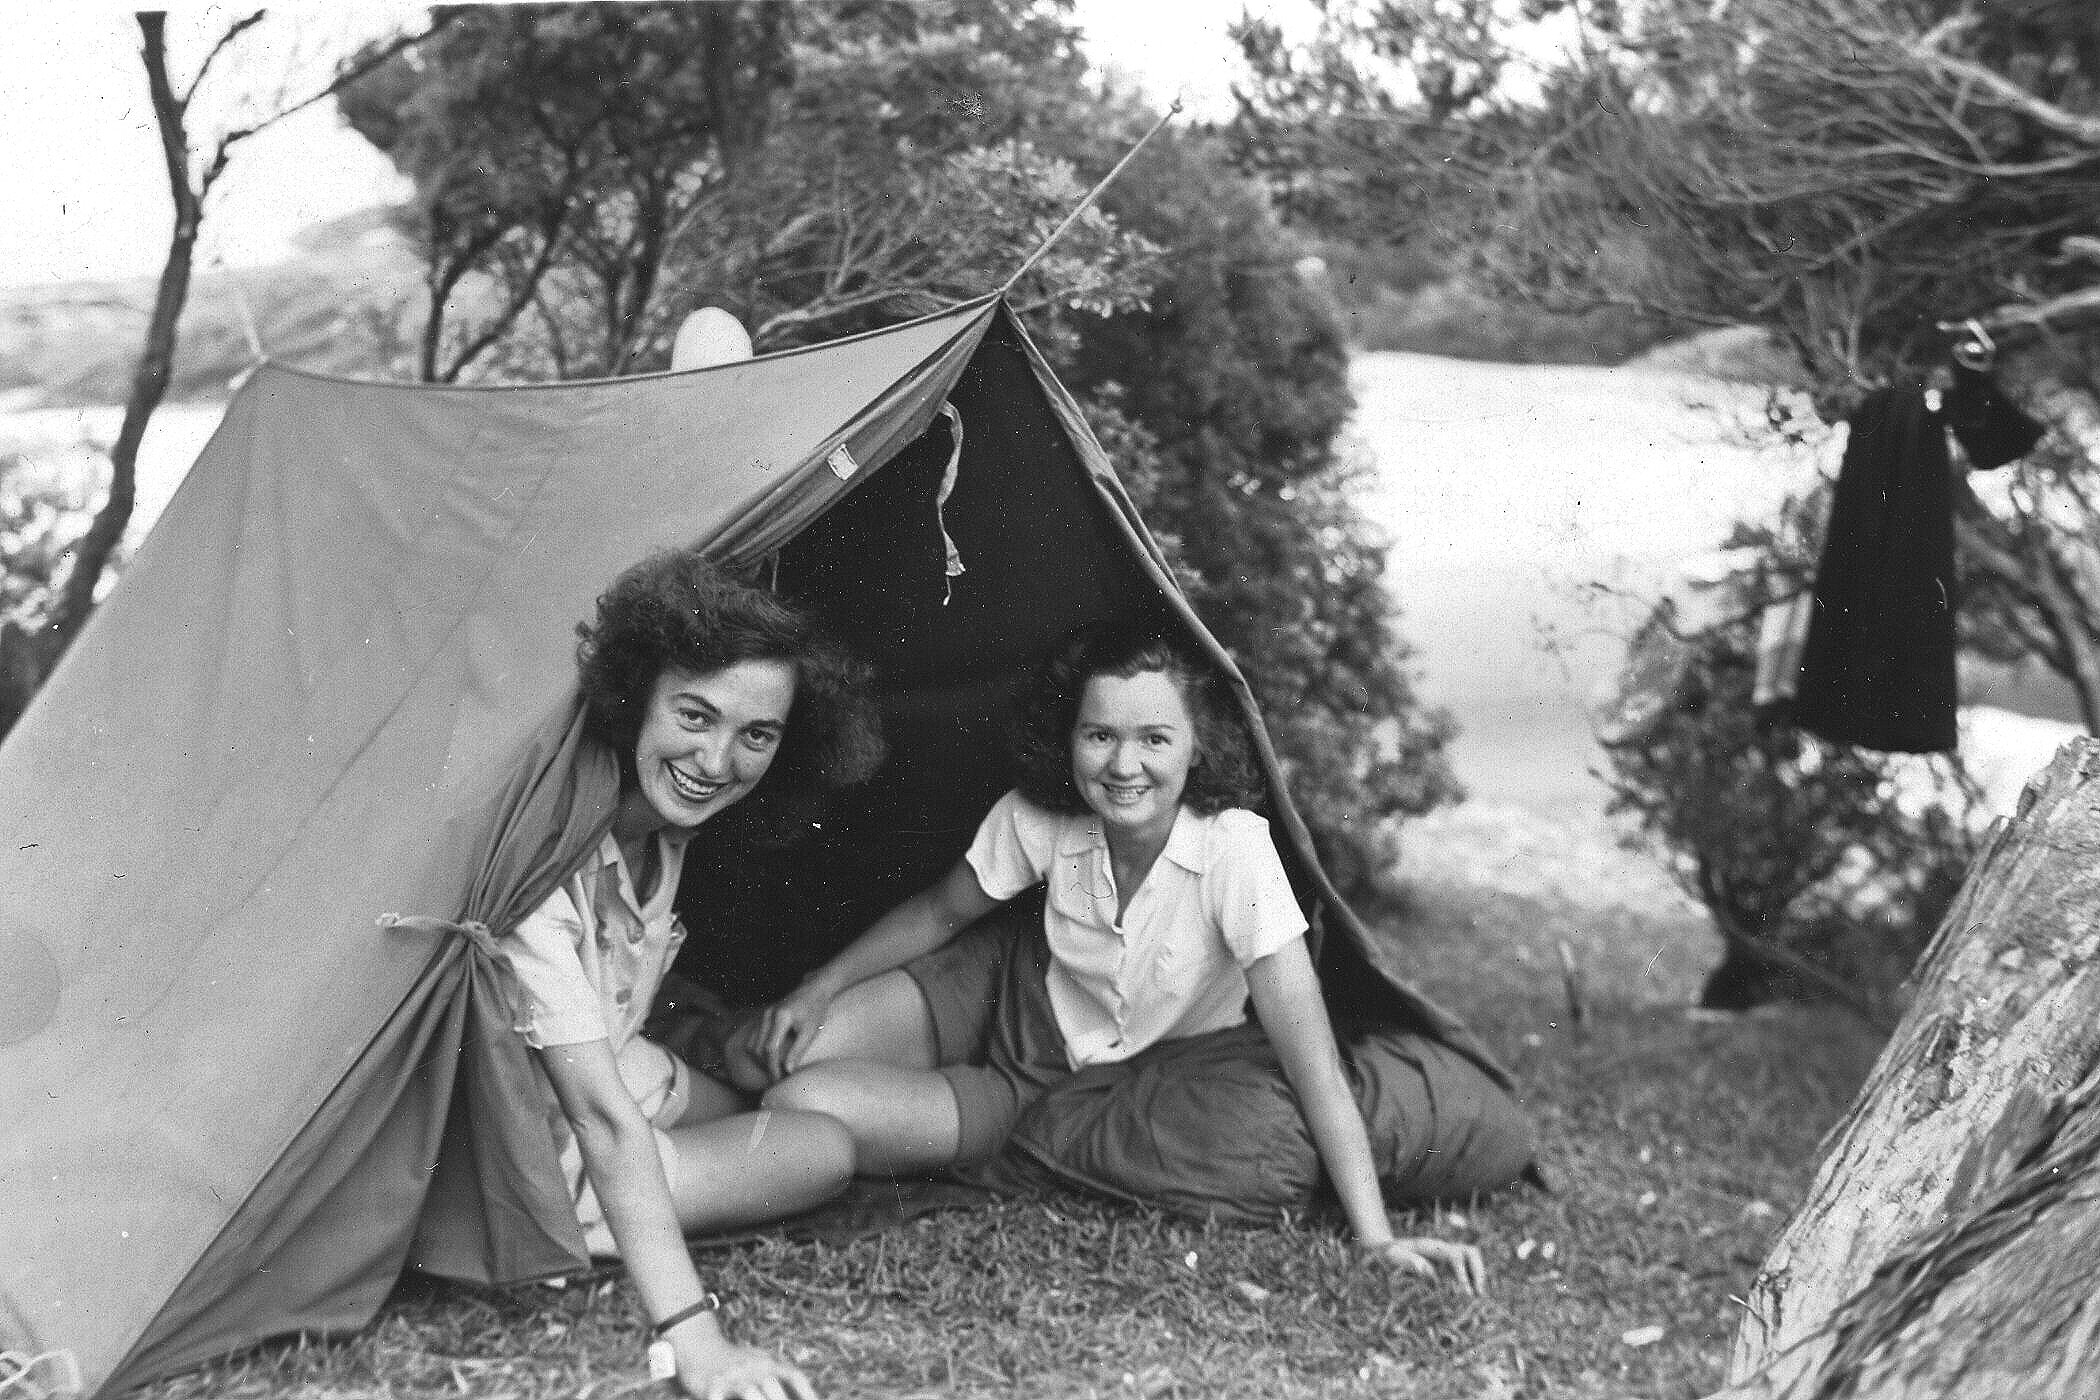 Nanna camping with a friend, in an era when few young women went hiking